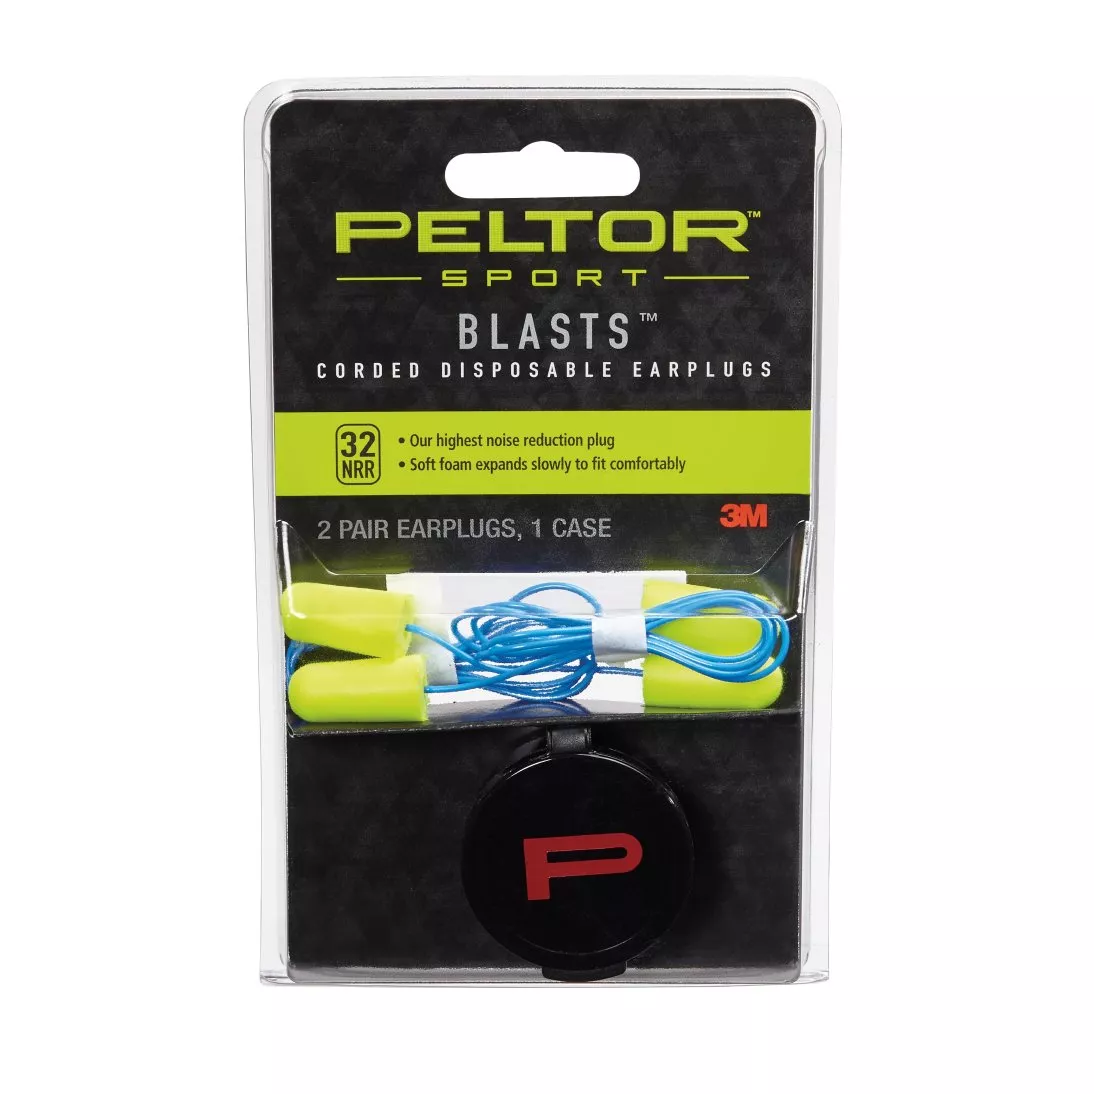 Peltor™ Sport Blasts™ Corded Disposable Earplugs 97081-10C, 2 Pair Pack,
Neon Yellow